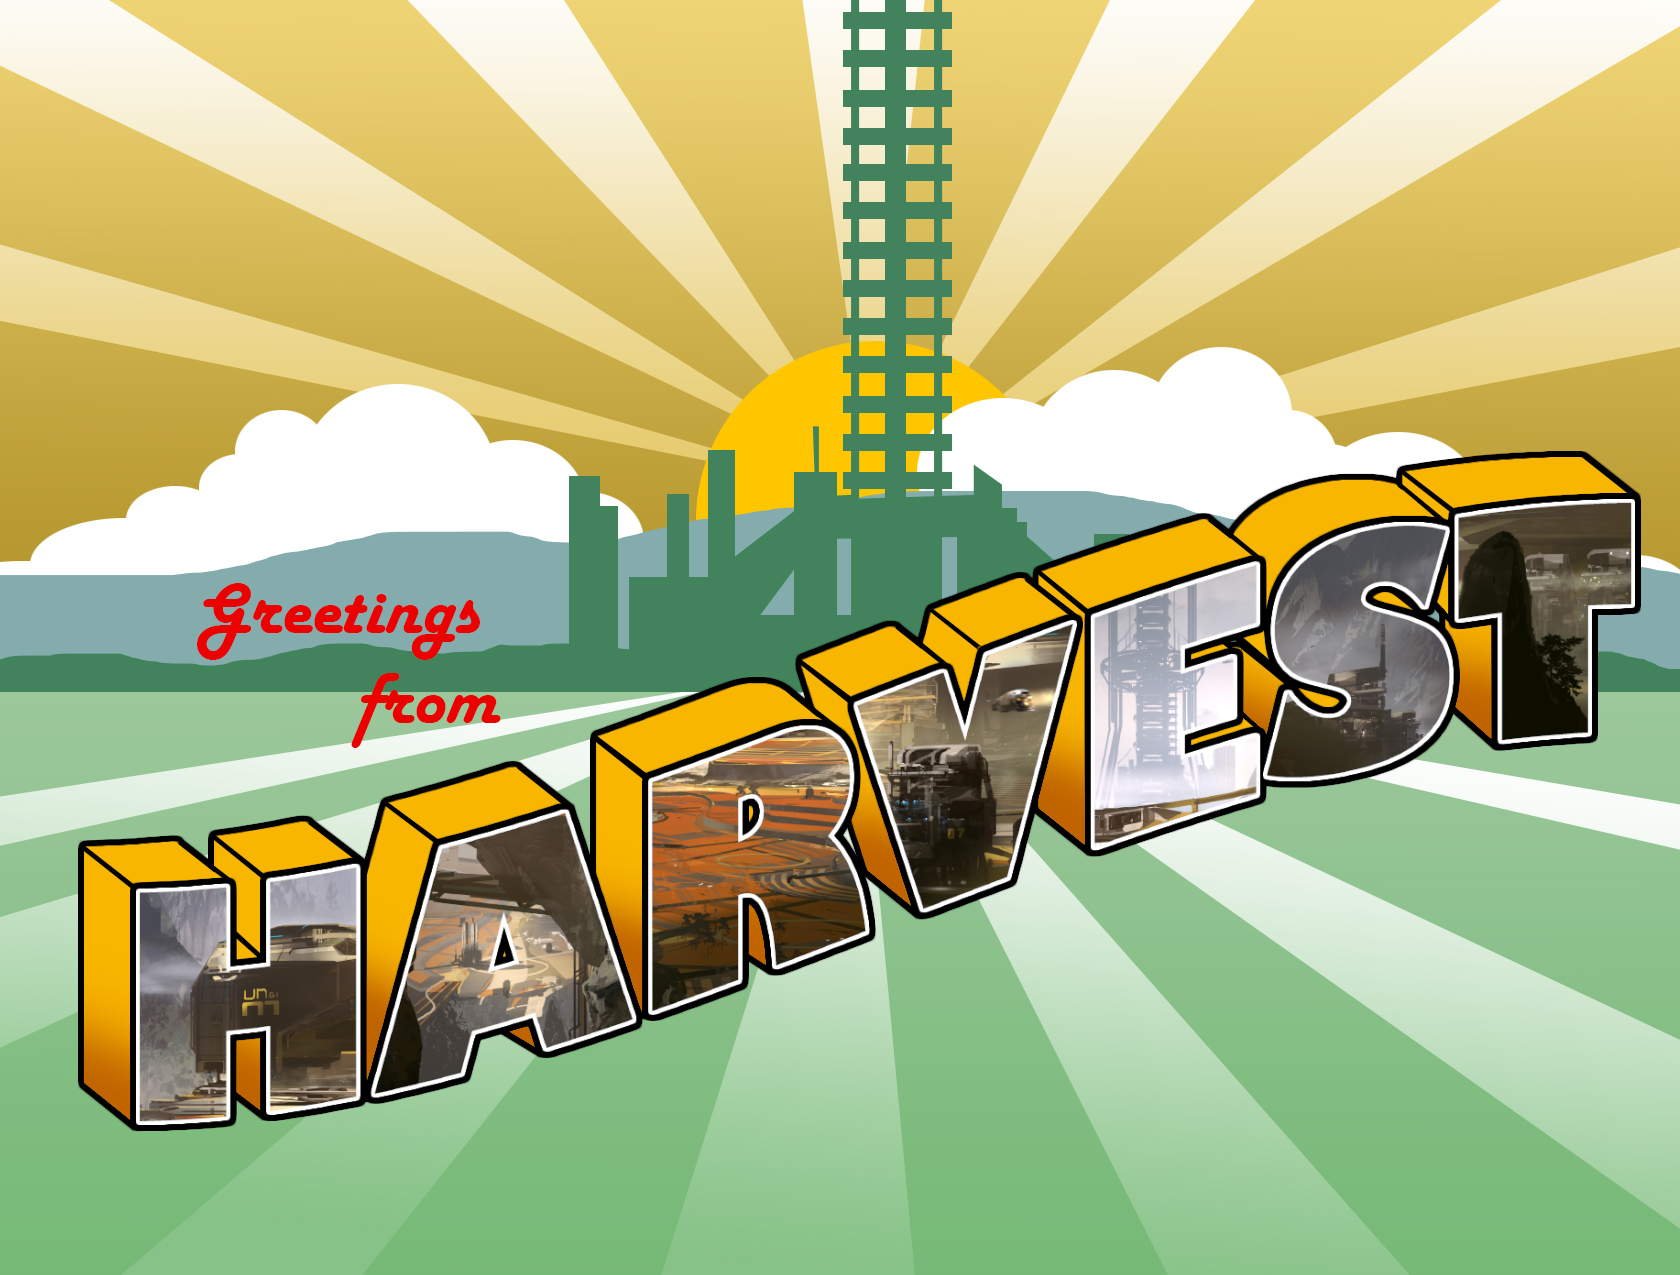 Harvest Postcard Design - Original design for a postcard from the Human colony of Harvest (Pre-Glassing)